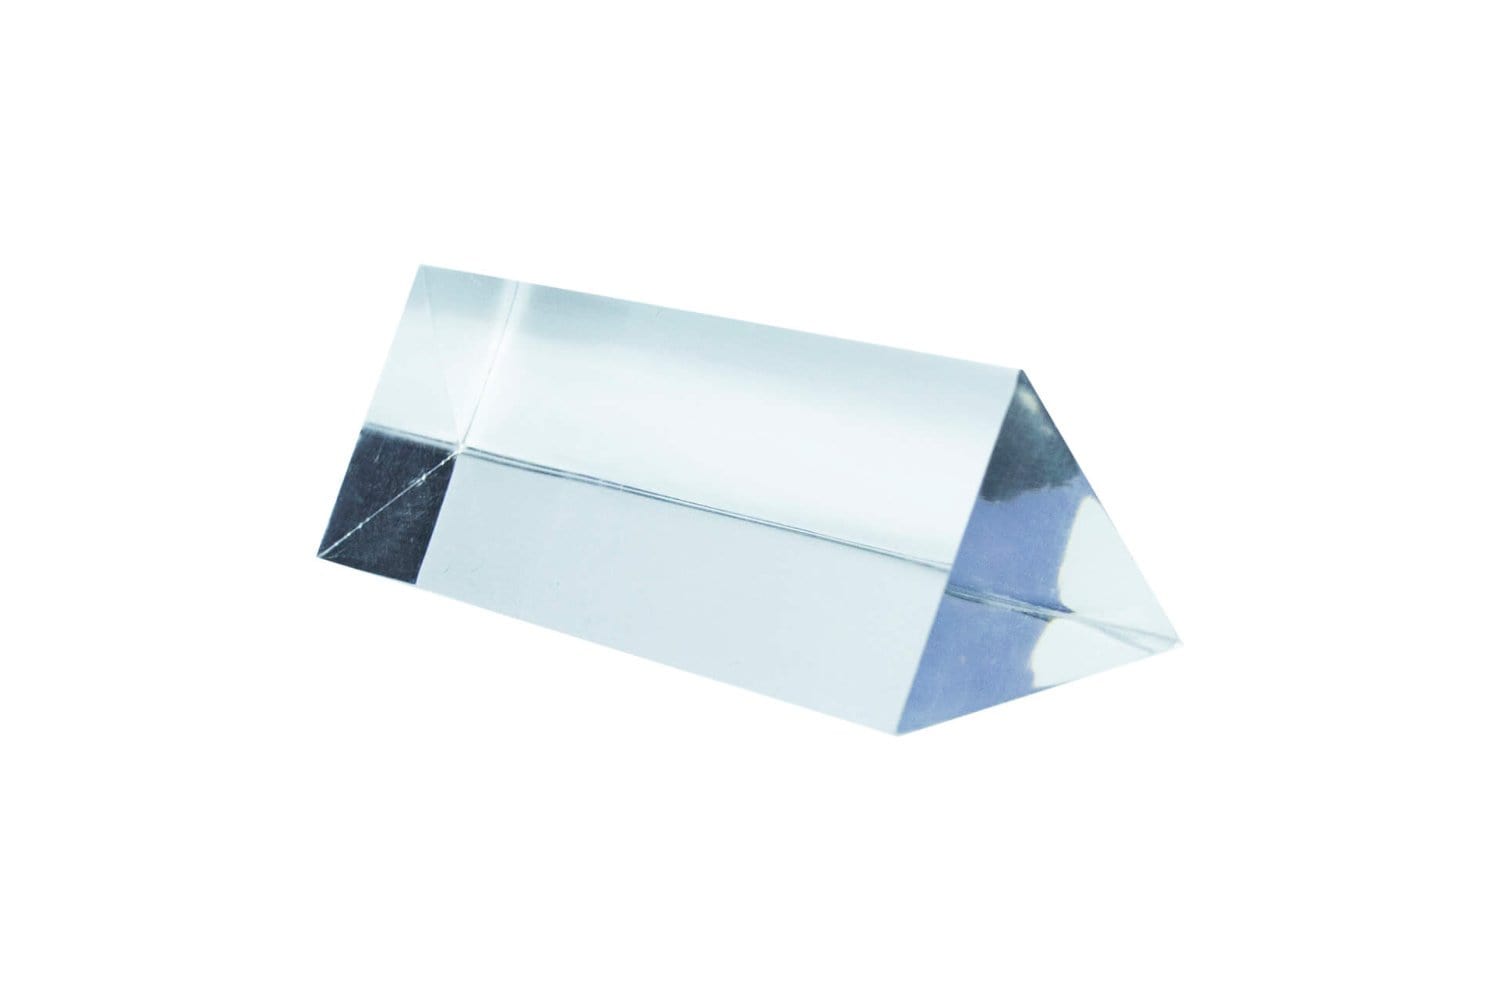 Arbor Scientific Equilateral Glass Prism